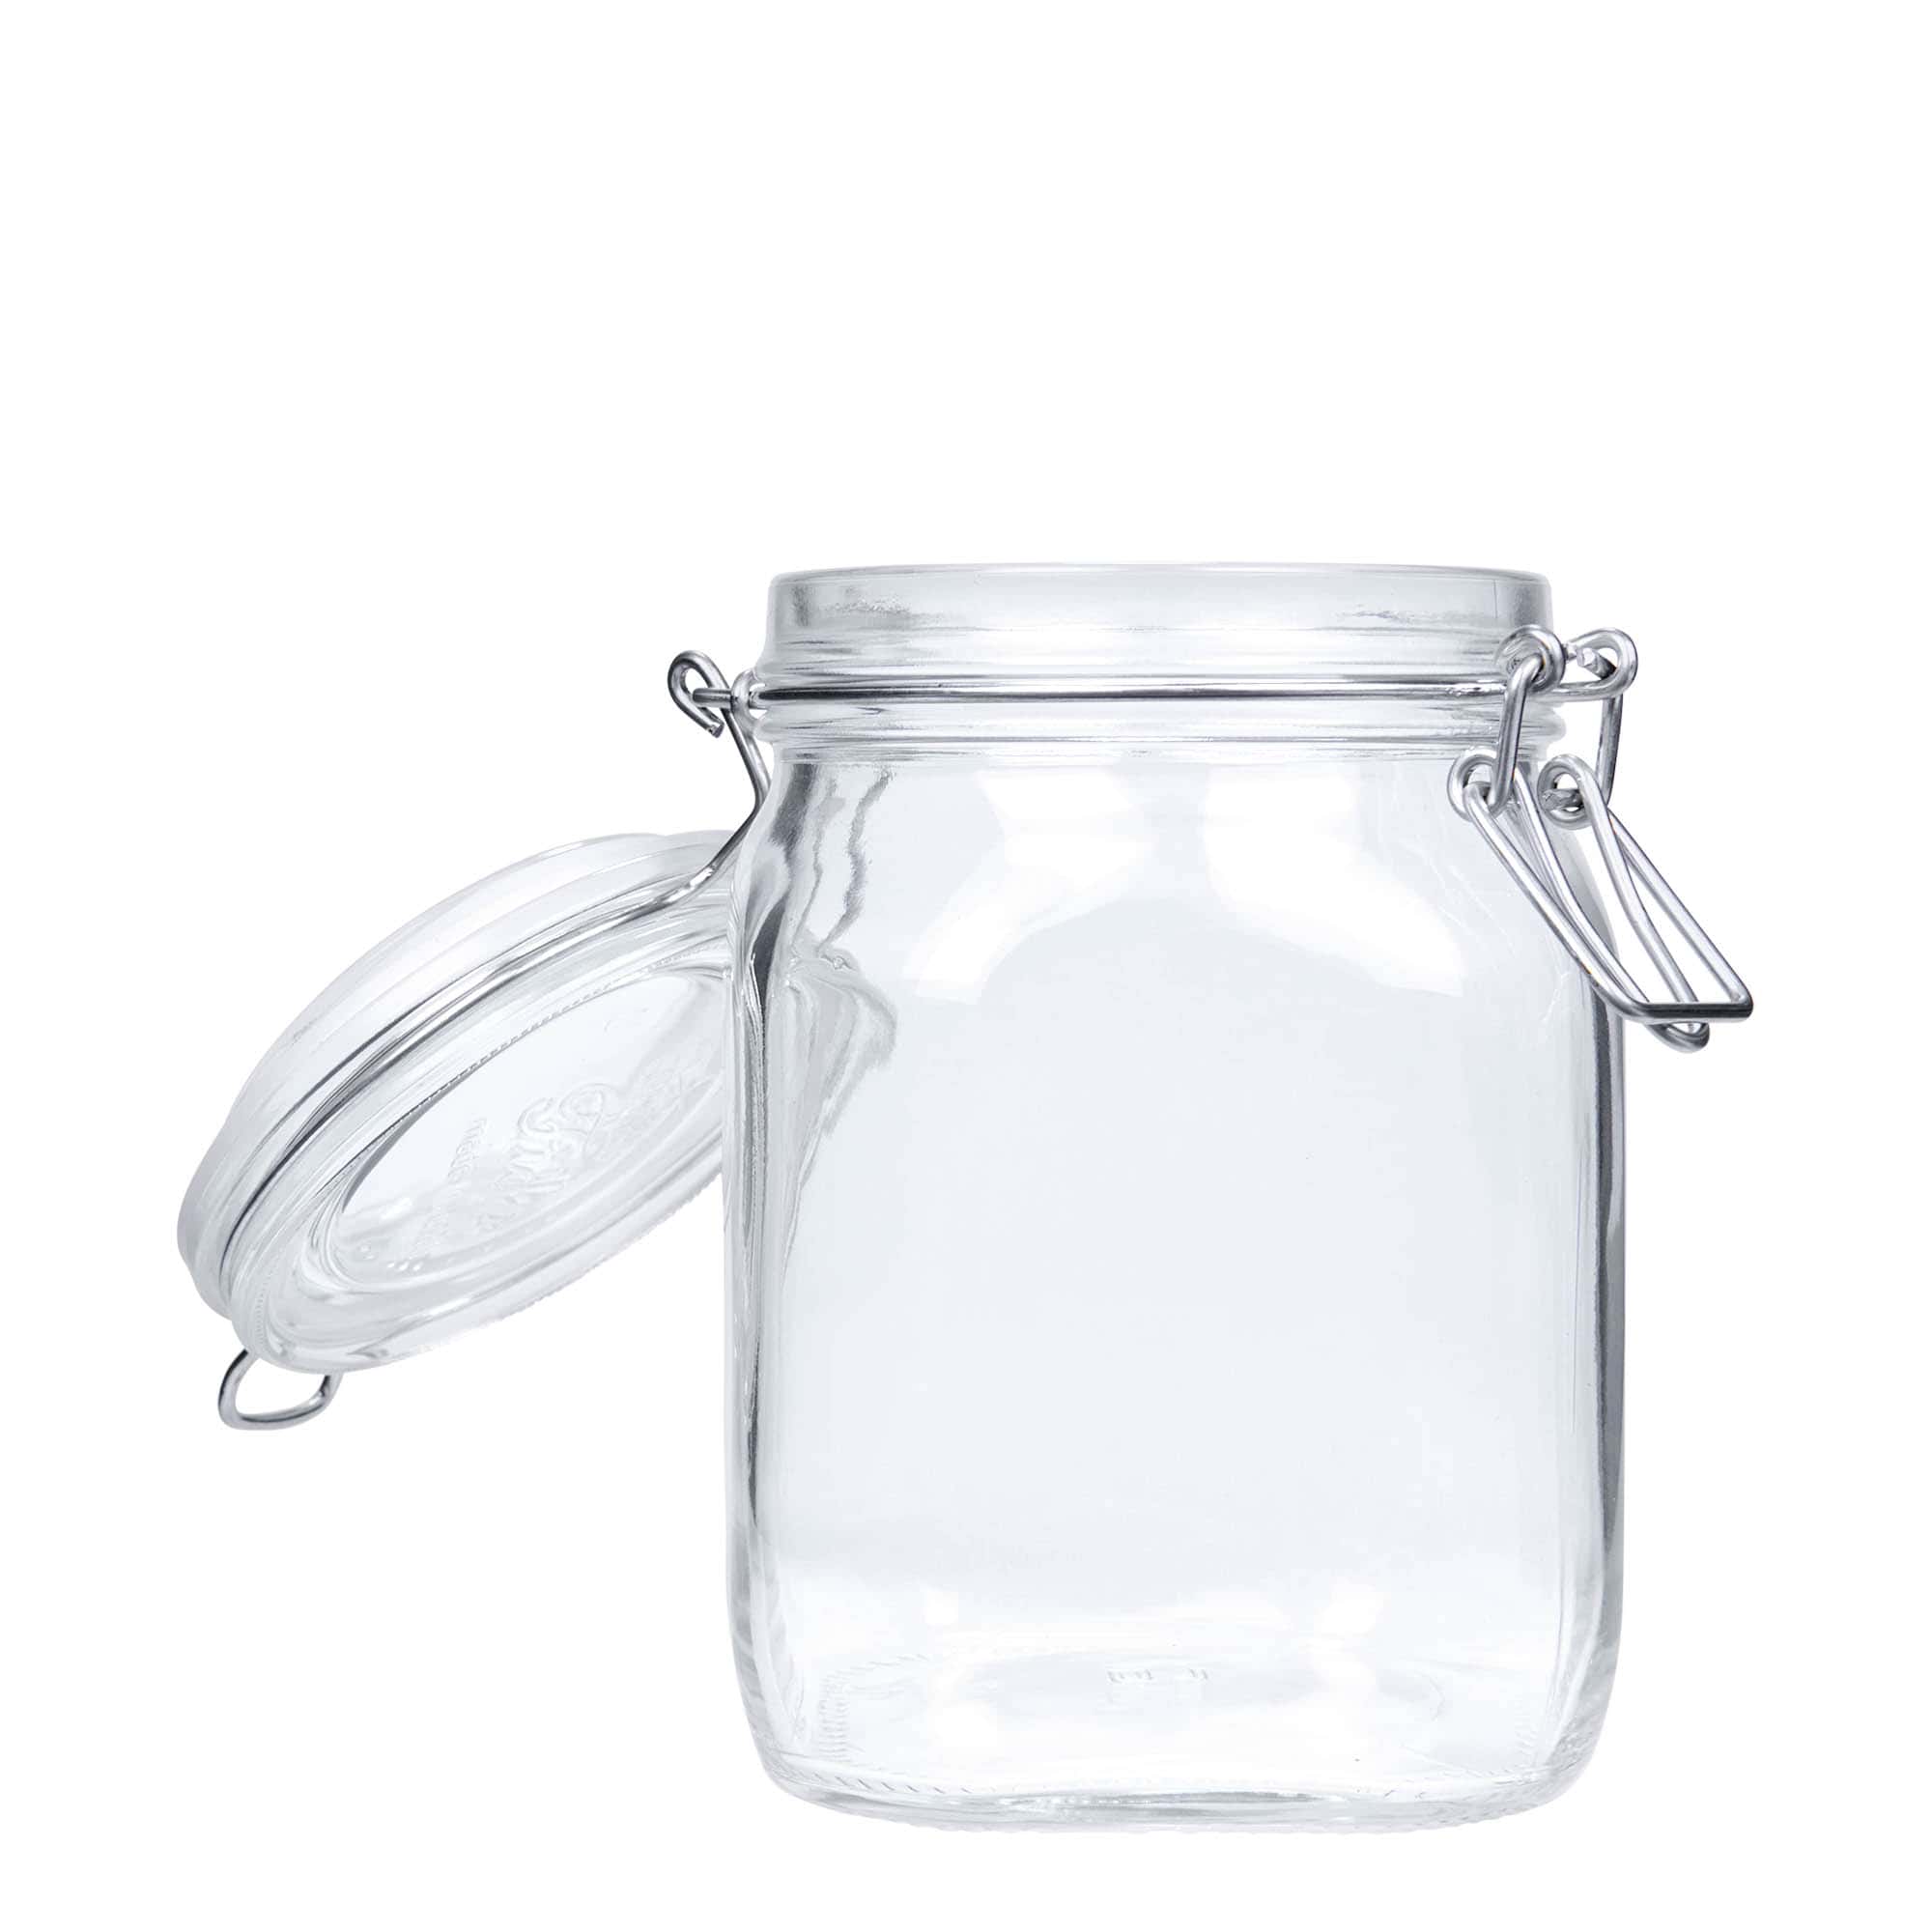 1,000 ml clip top jar 'Fido', square, closure: clip top